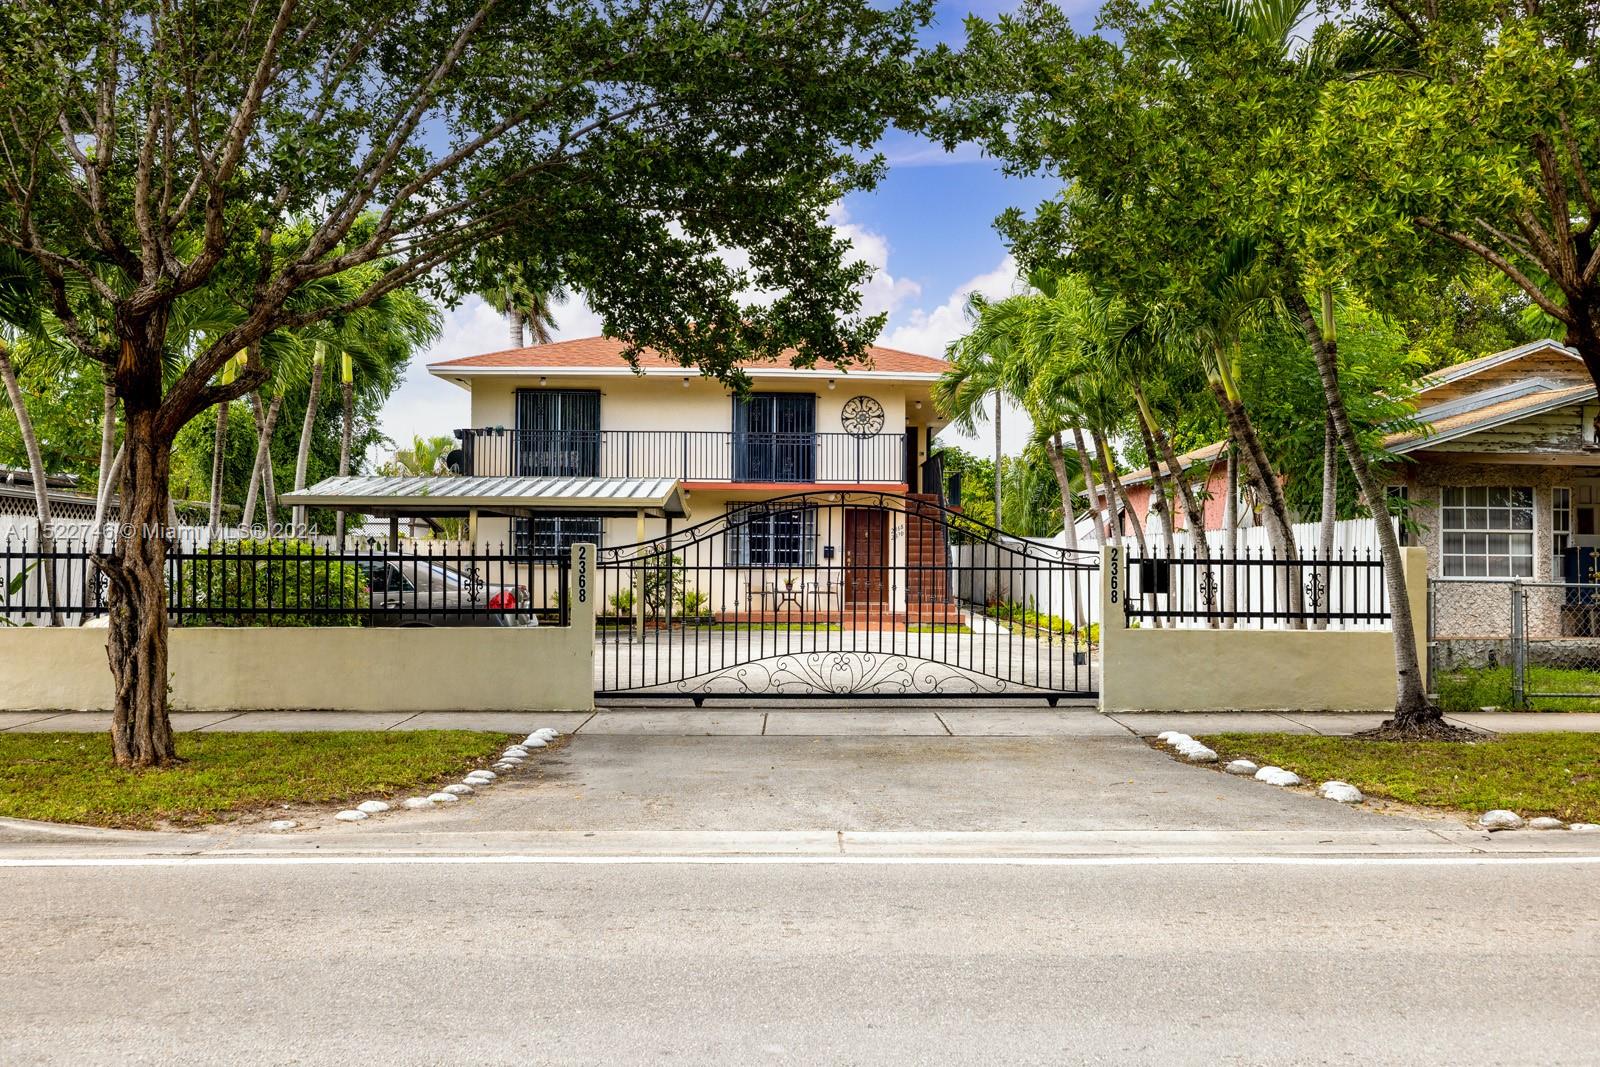 Rental Property at 2368 Sw 32nd Ave, Miami, Broward County, Florida -  - $1,590,000 MO.